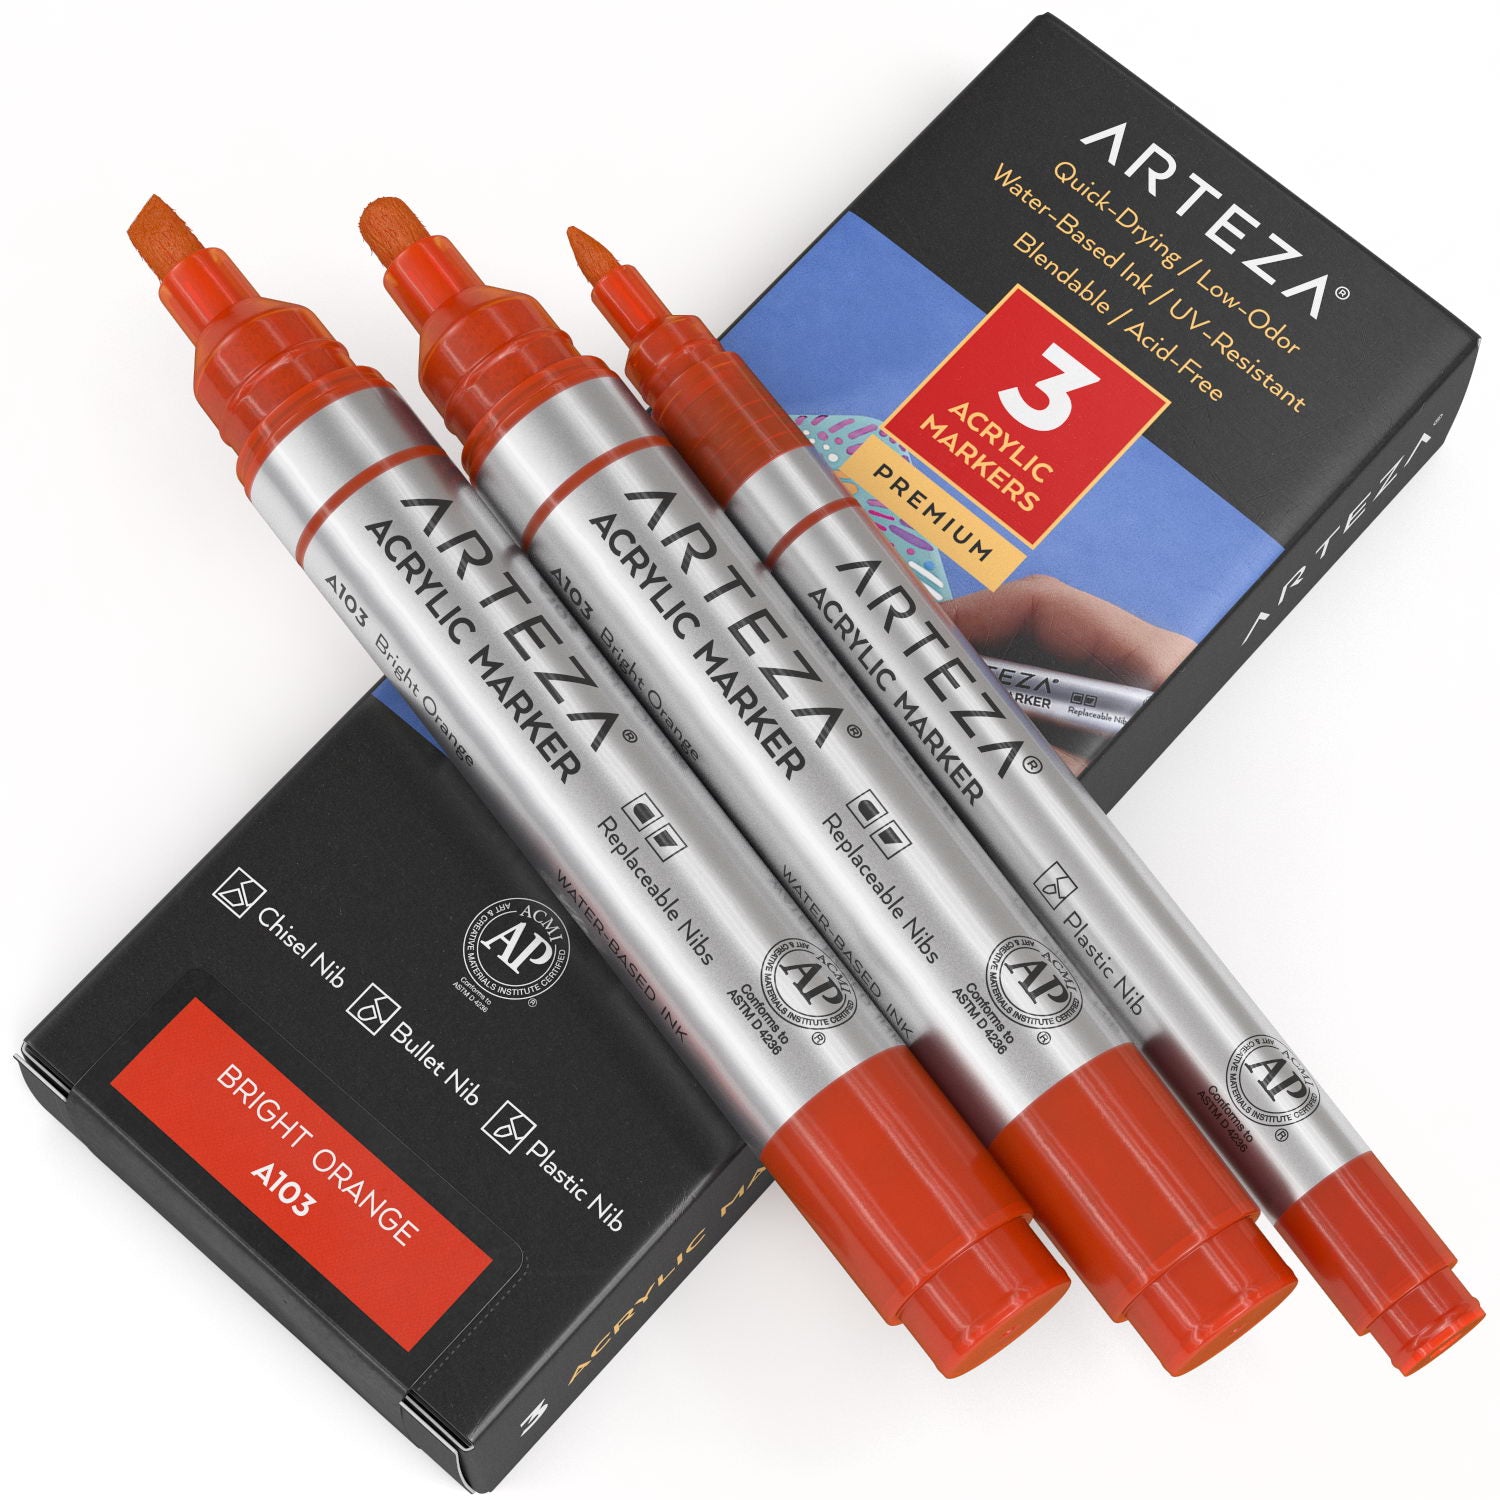 Arteza Acrylic Paint Marker Review